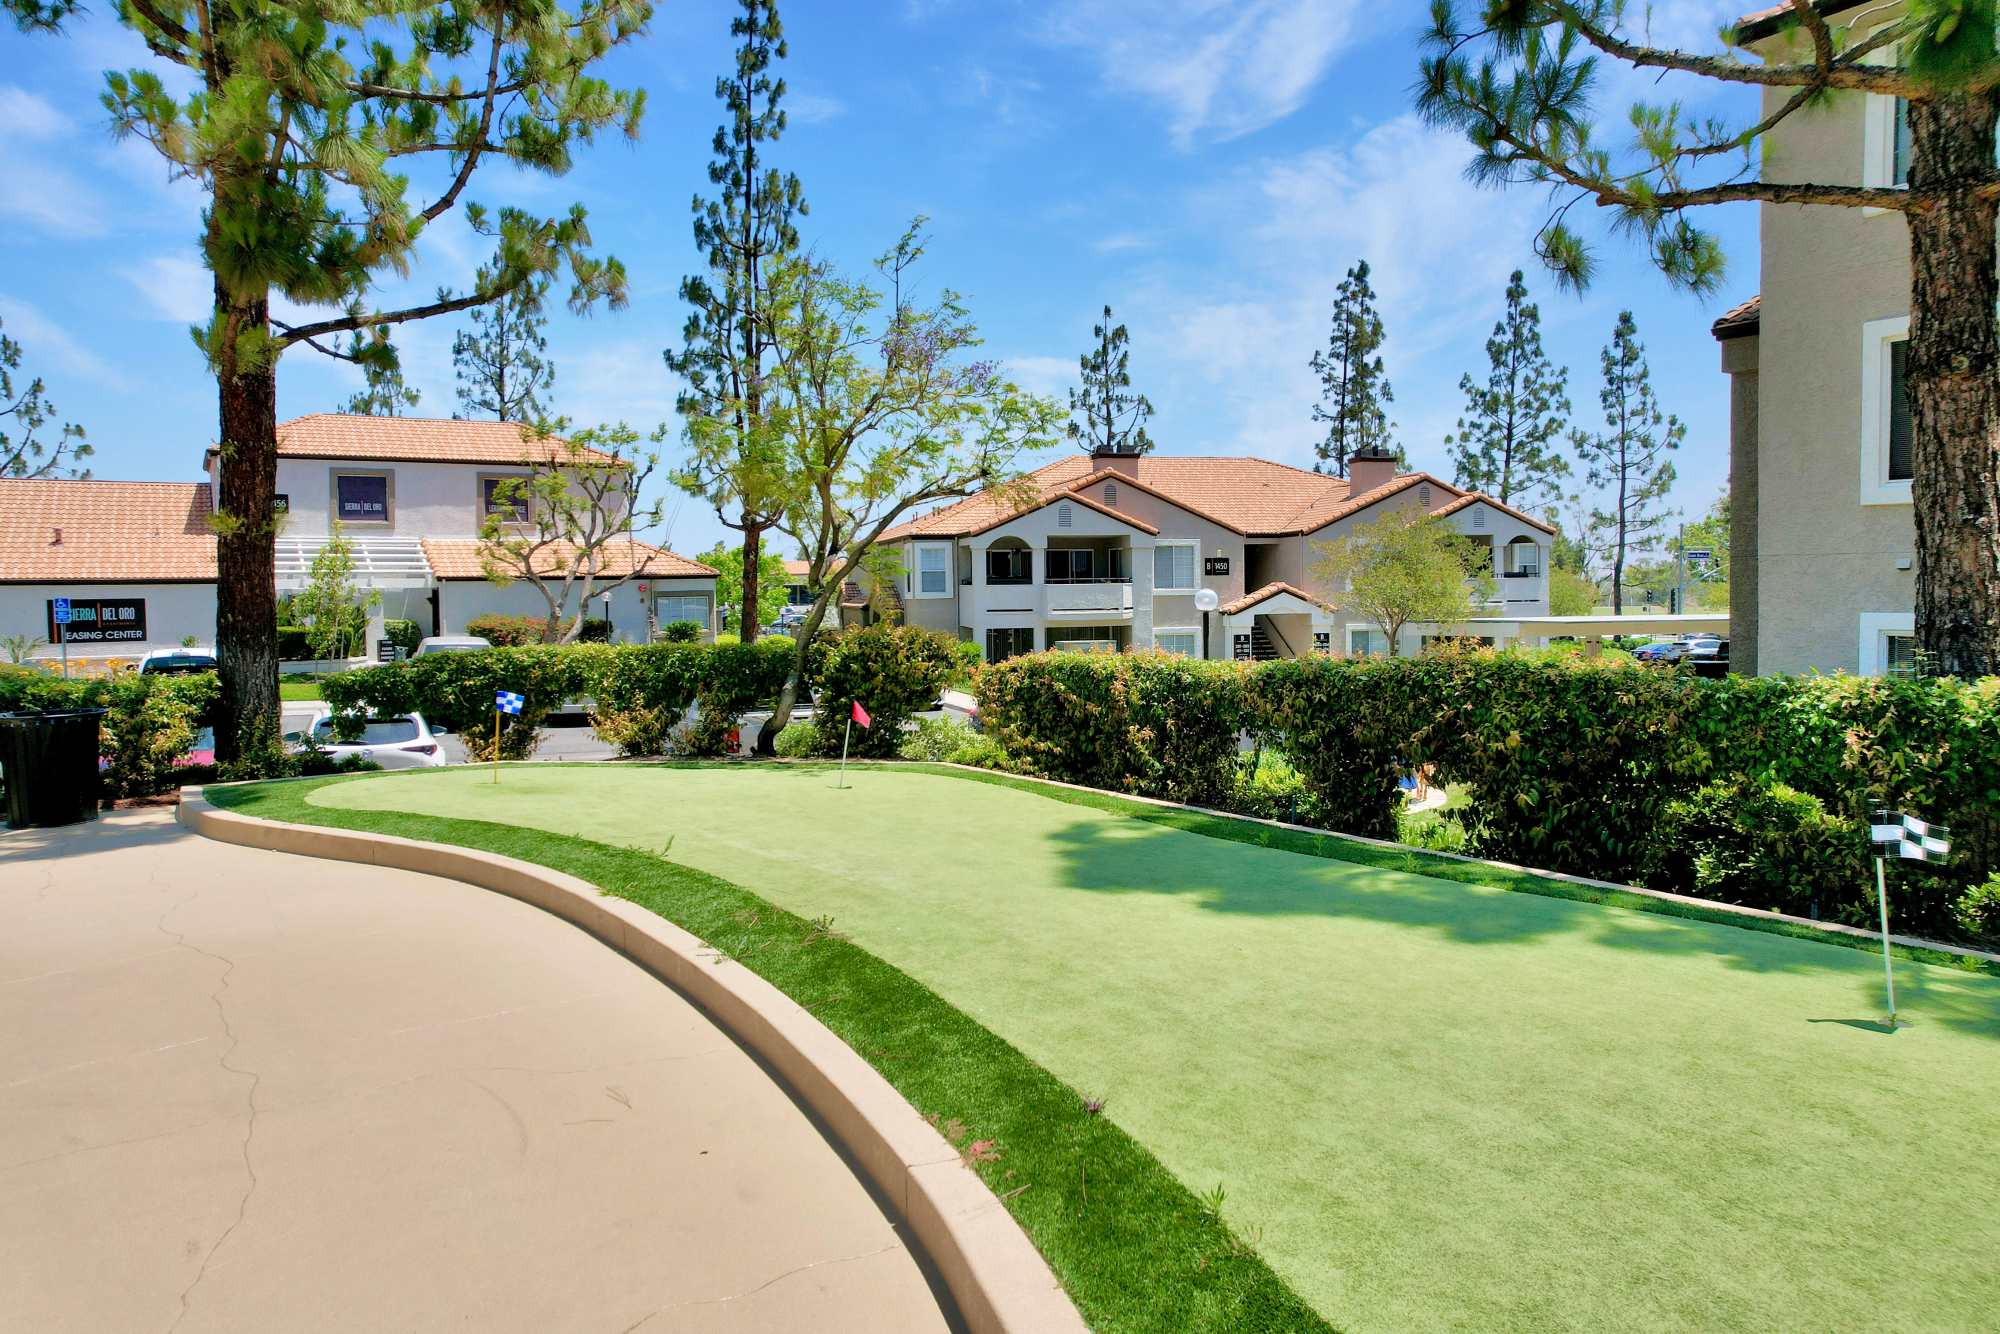 Putting green area at Sierra Del Oro Apartments in Corona, California